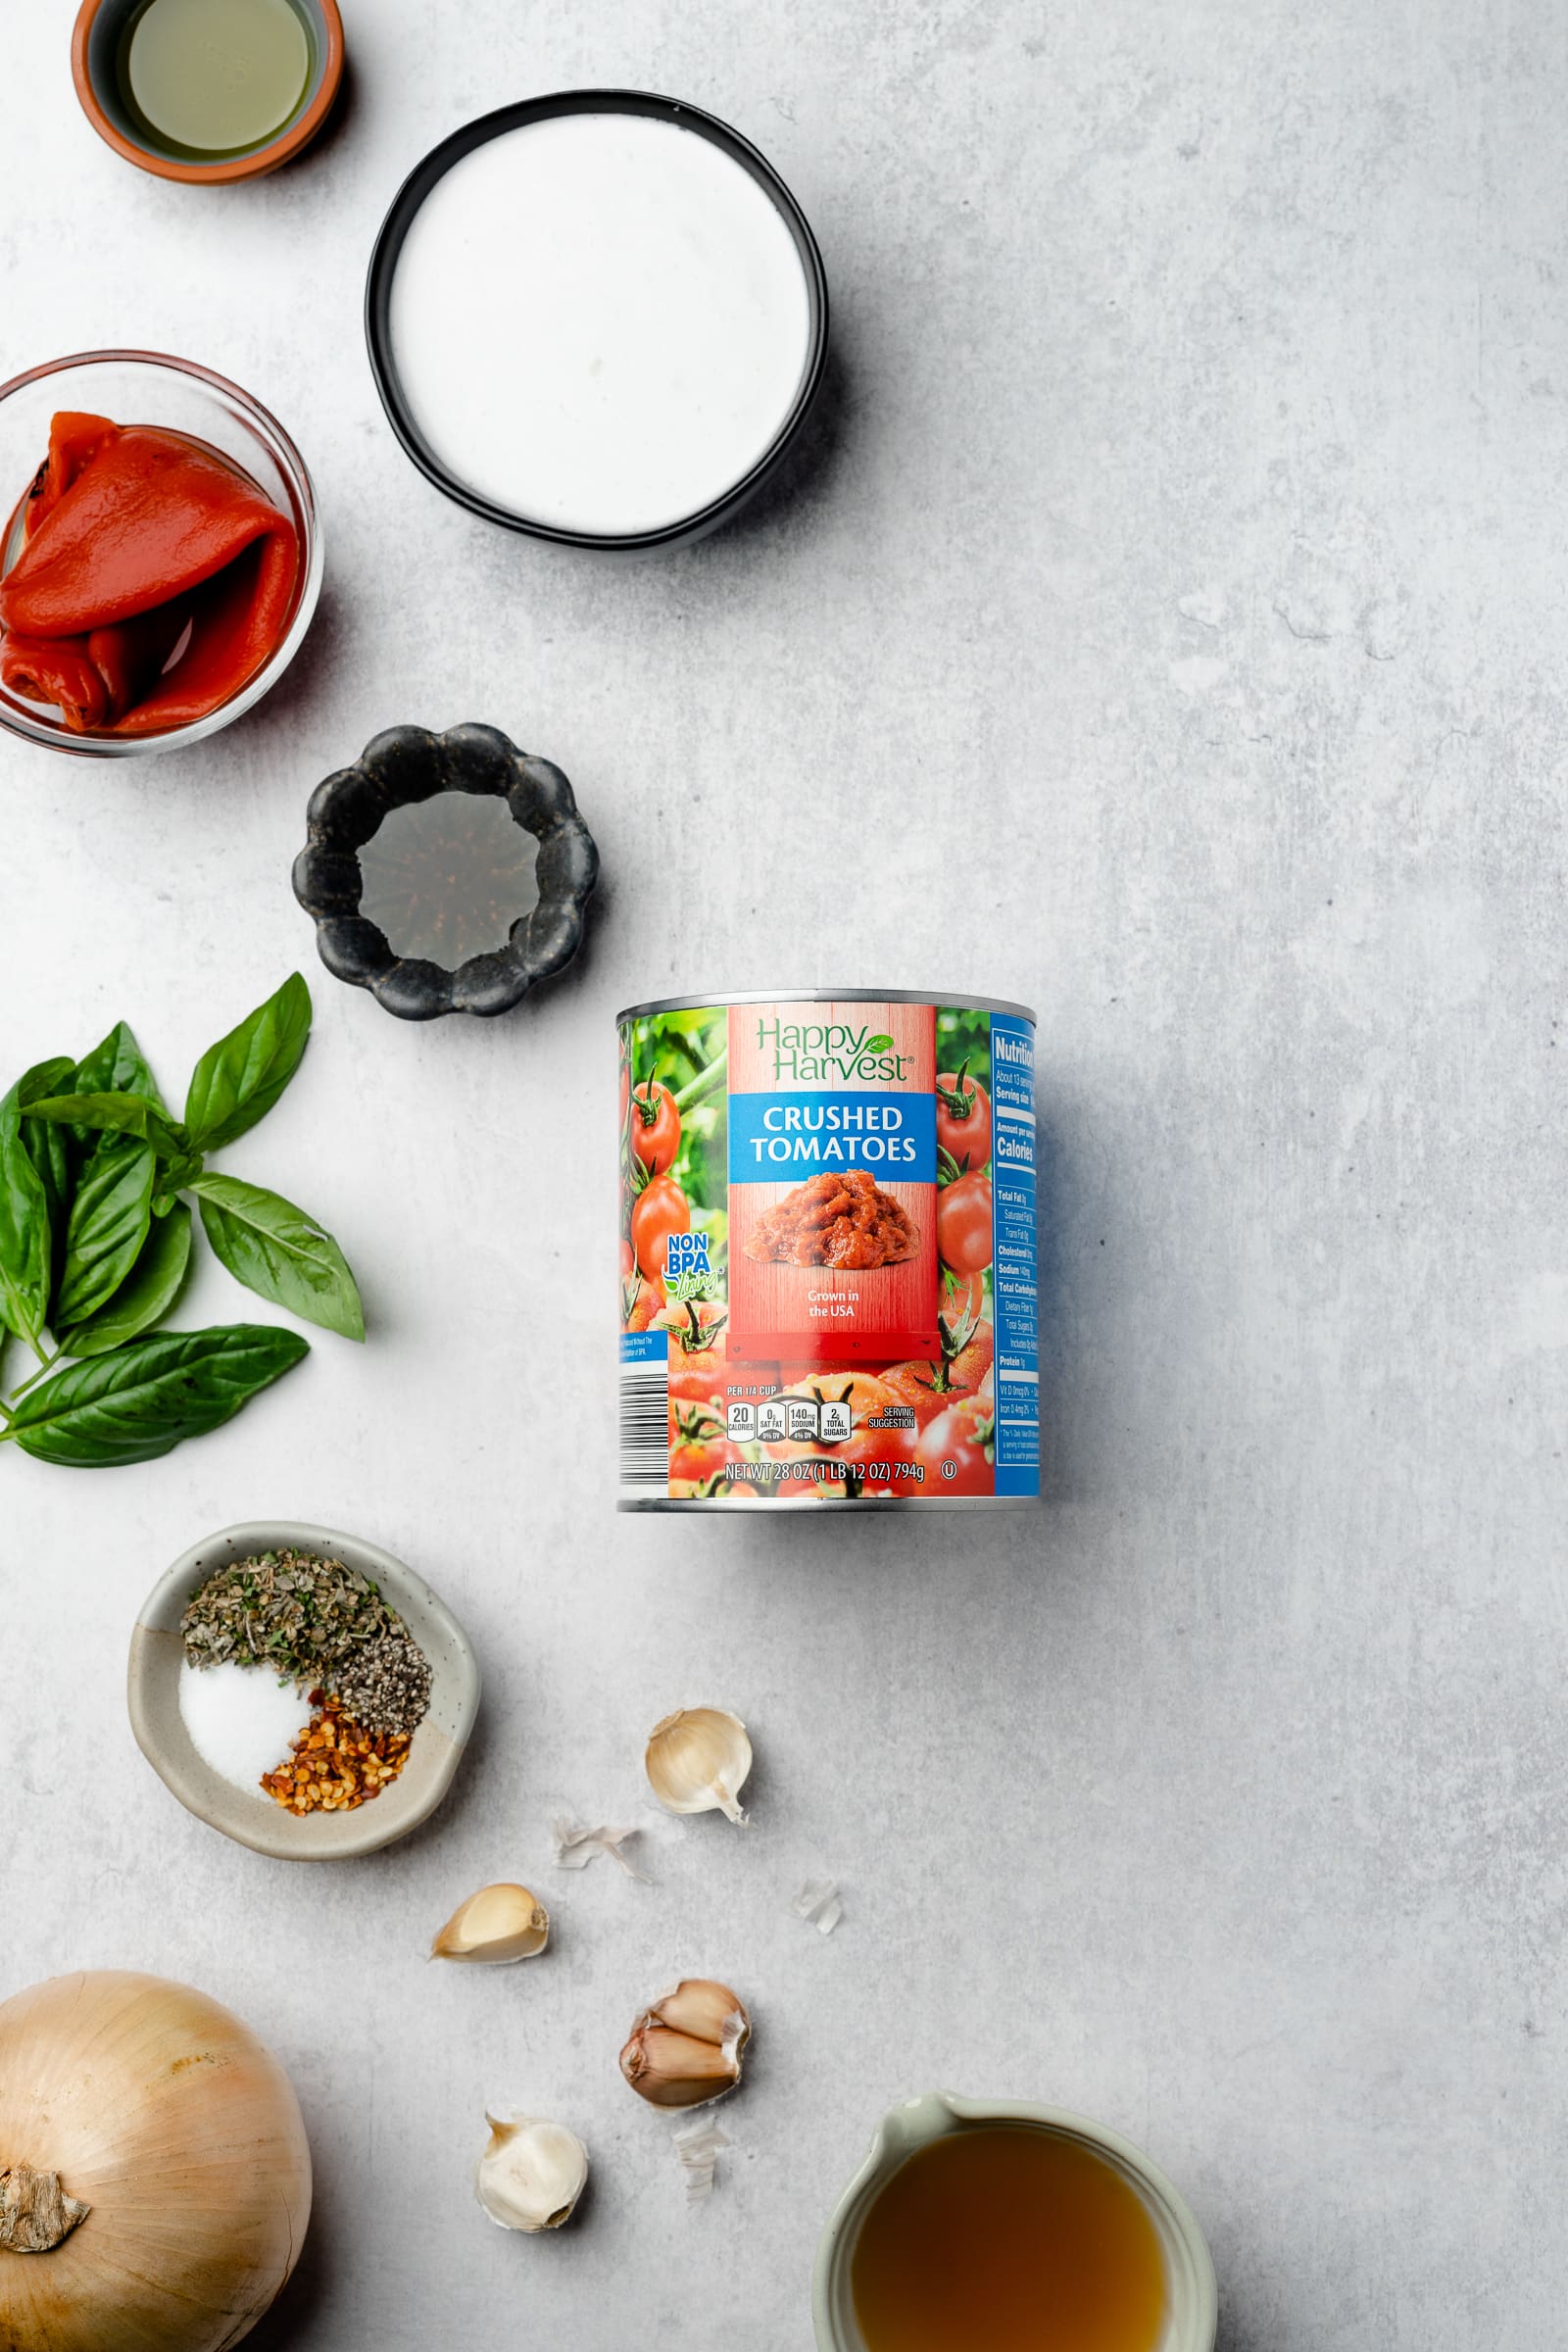 Tomato basil soup ingredients on a gray backdrop.